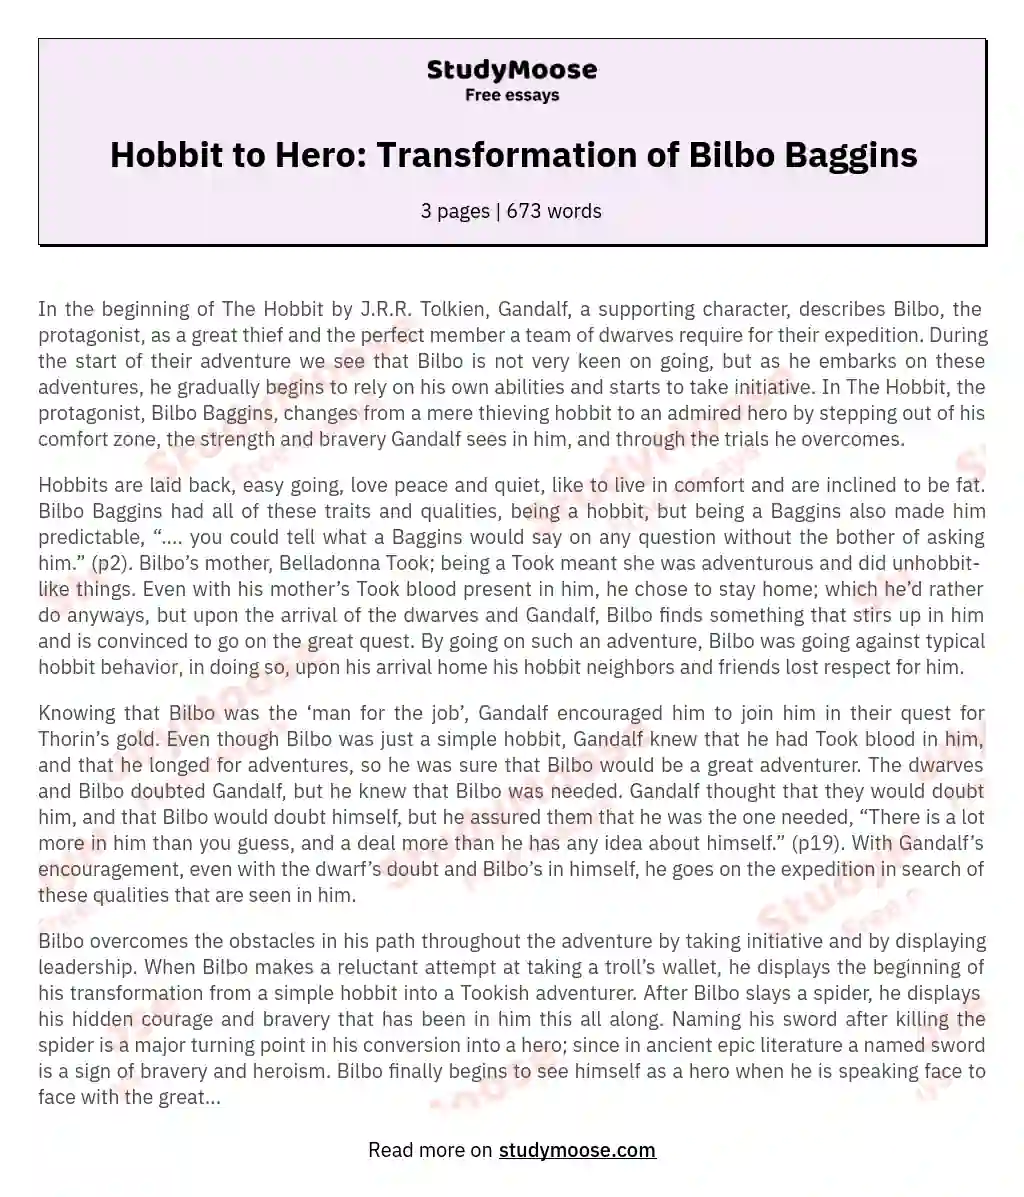 Hobbit to Hero: Transformation of Bilbo Baggins